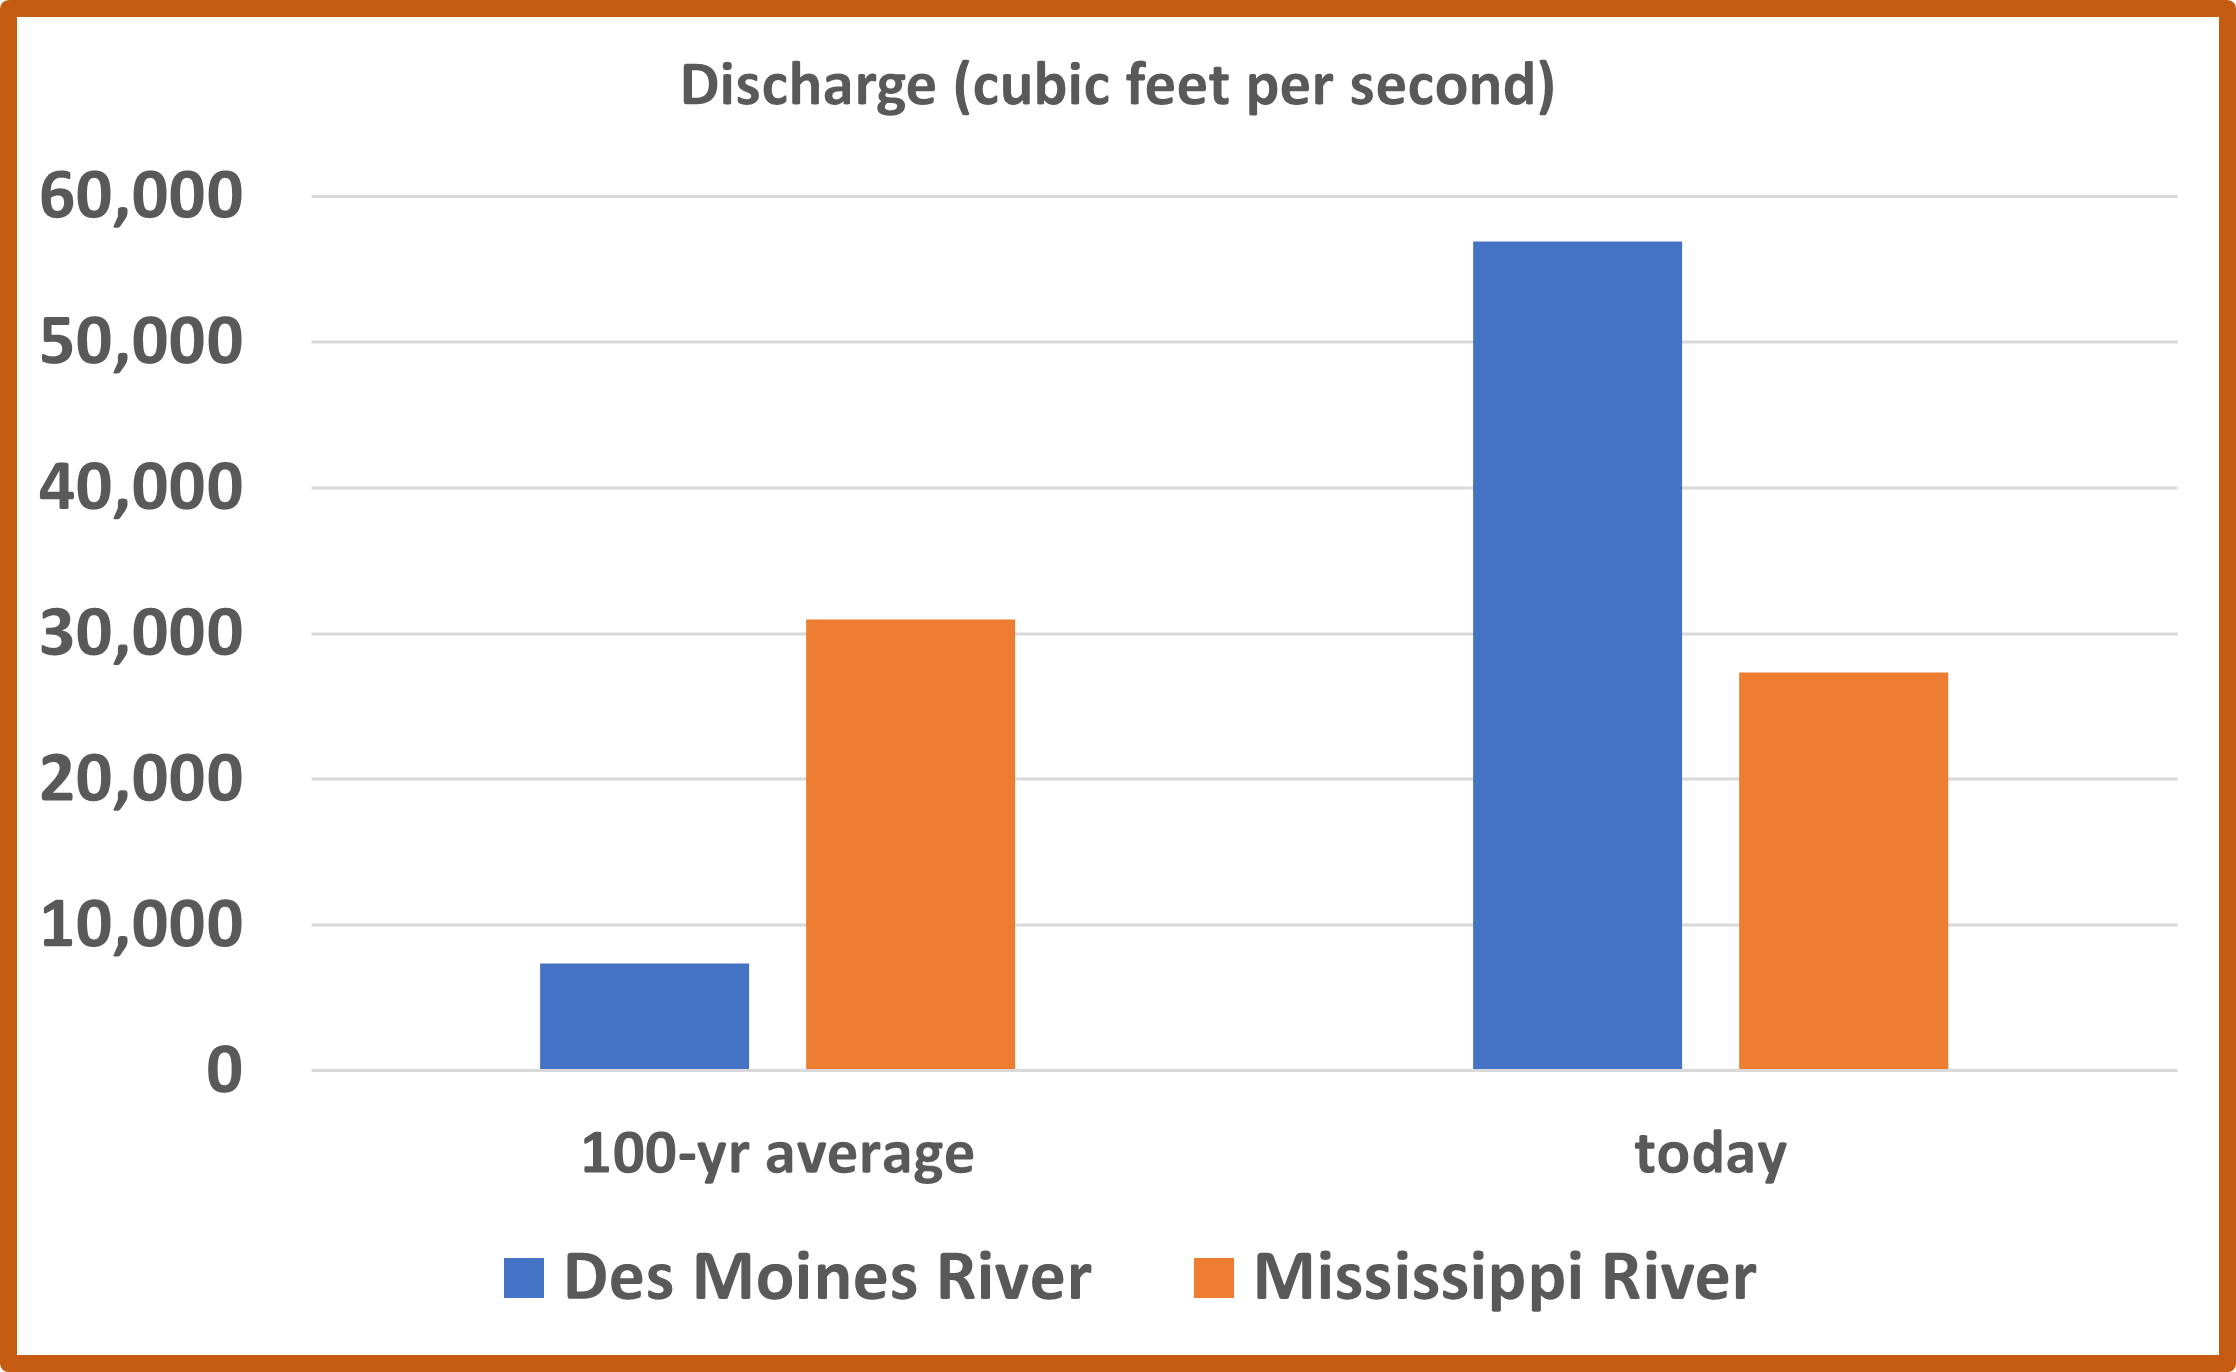 discharge on Des Moines river